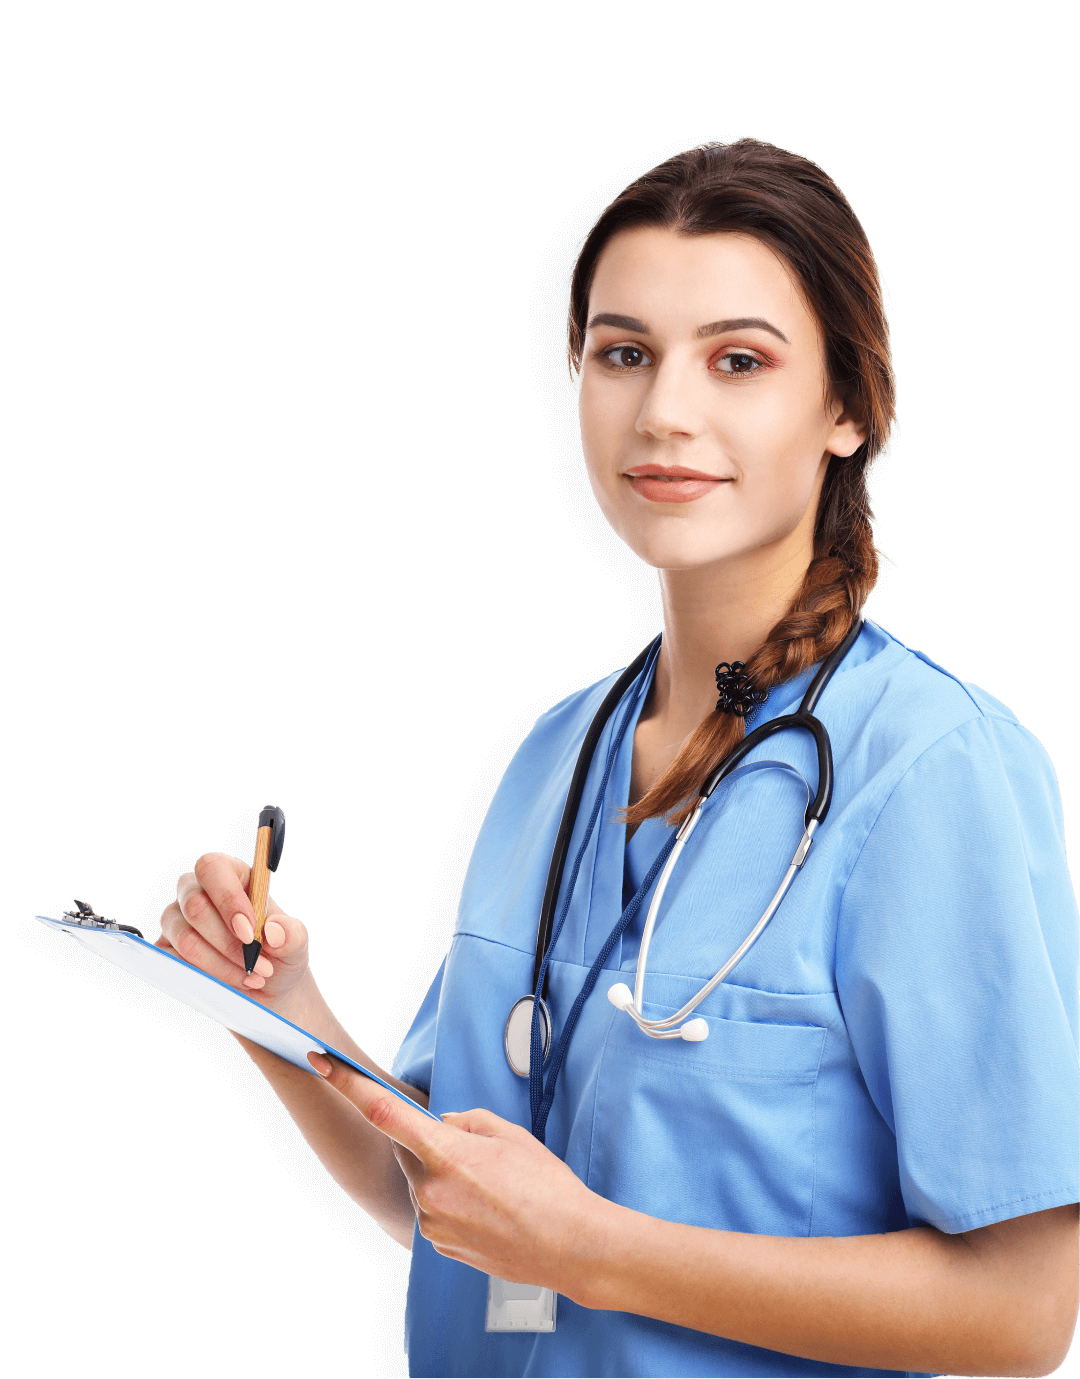 Nurse-Medical Surgical professional